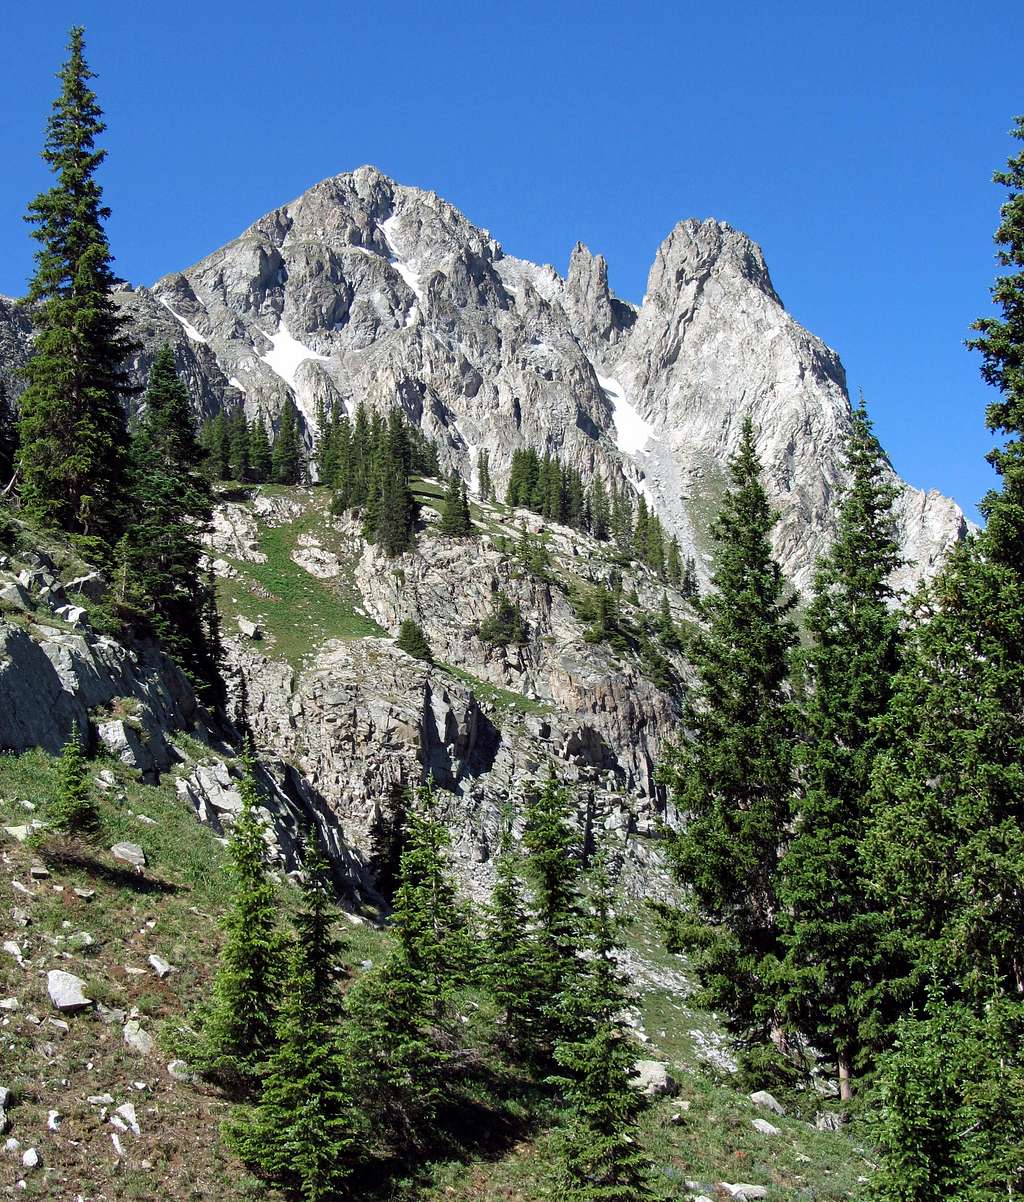 Un-named Peak west of Capitol Creek Trail